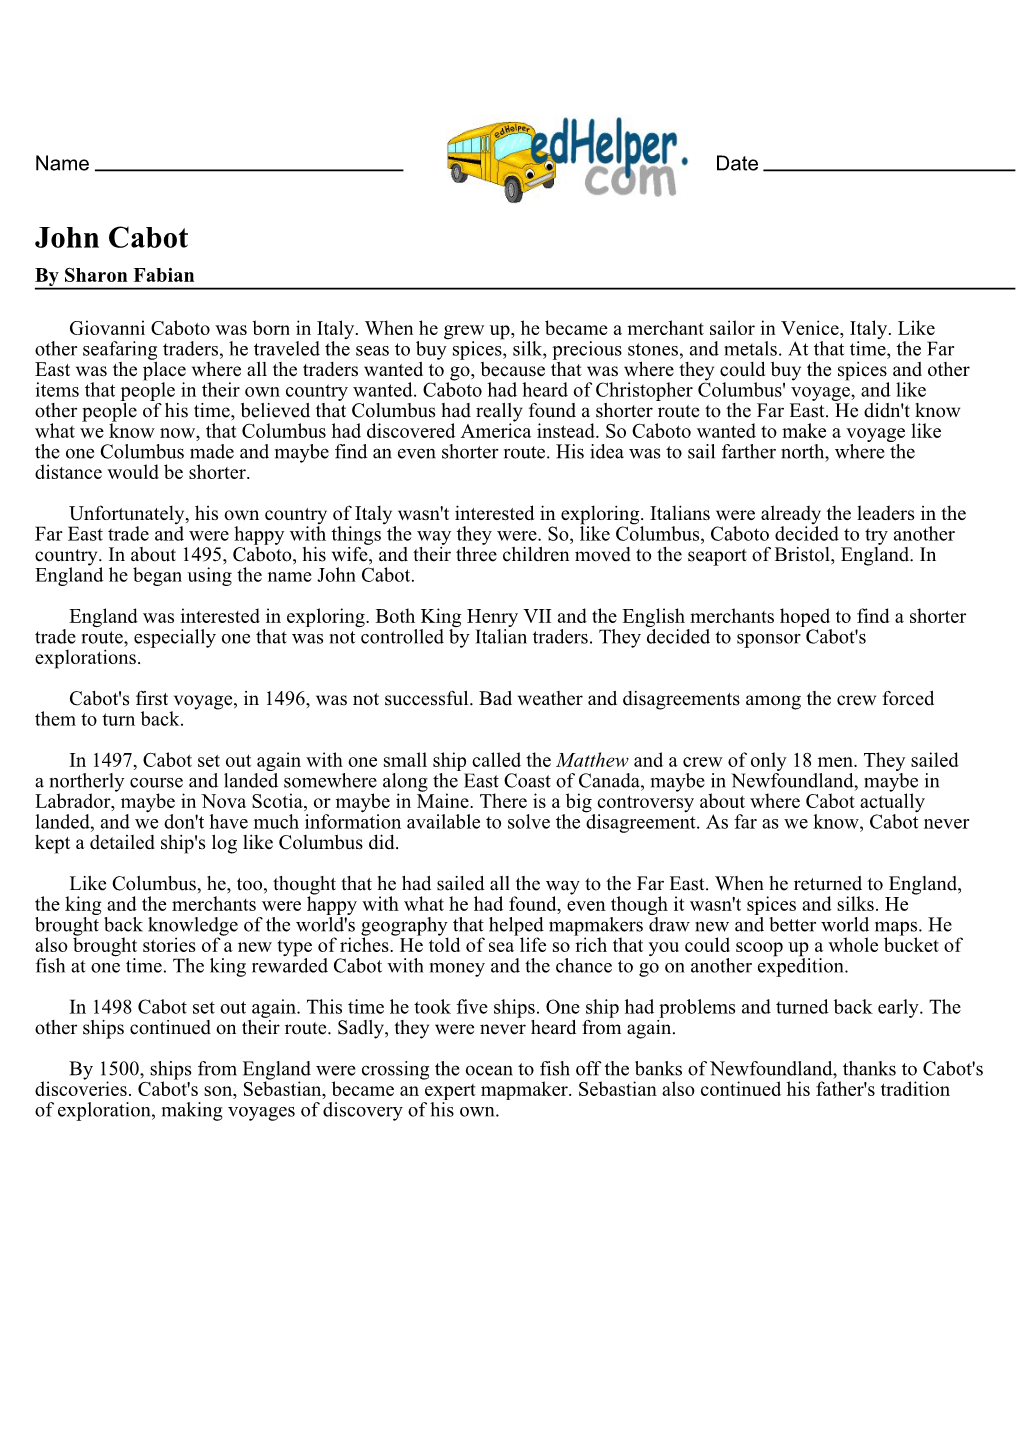 John Cabot by Sharon Fabian